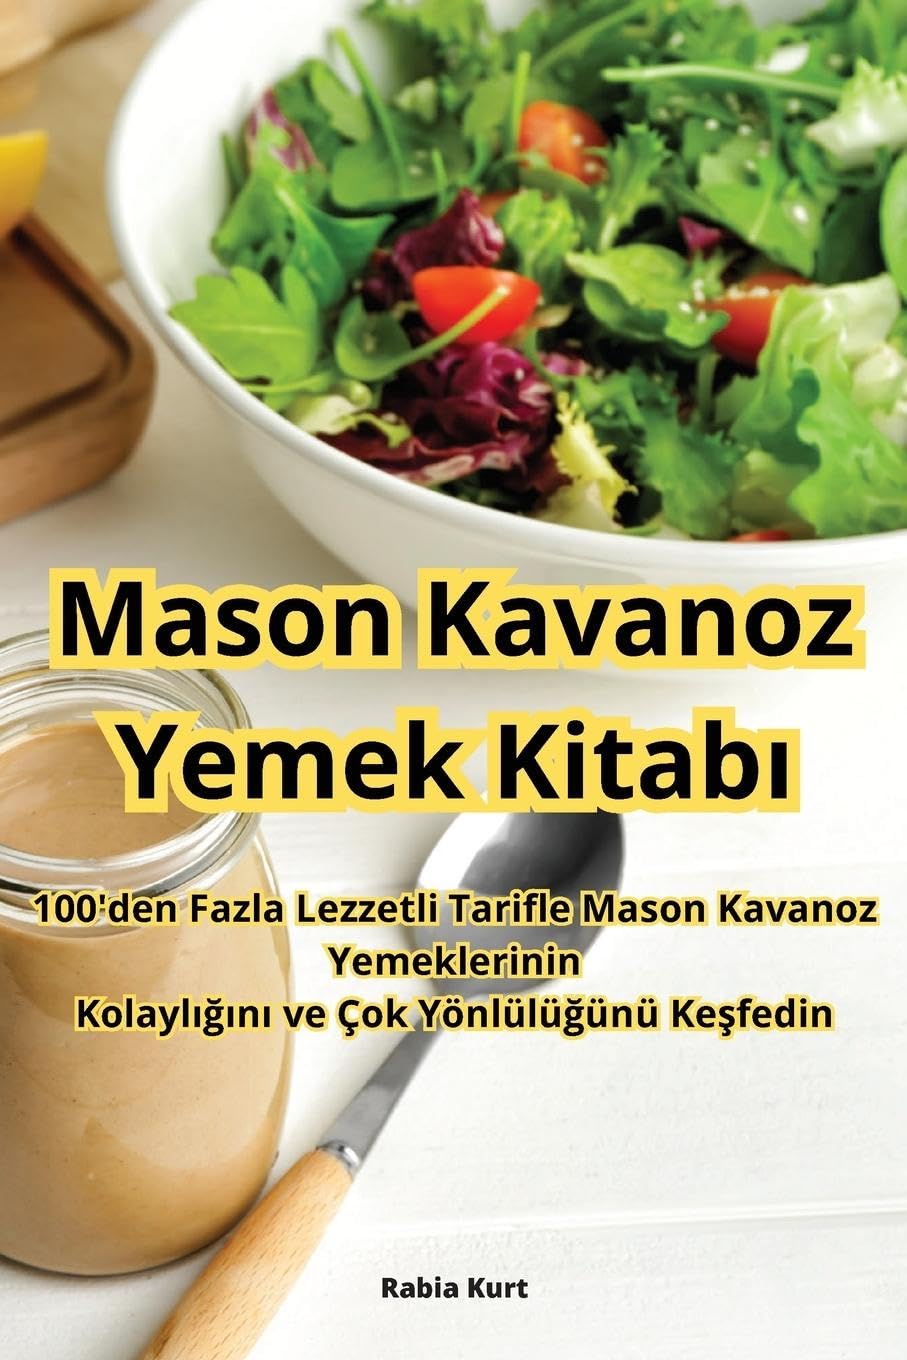 Mason Kavanoz Yemek Kitabı (Turkish Edition)